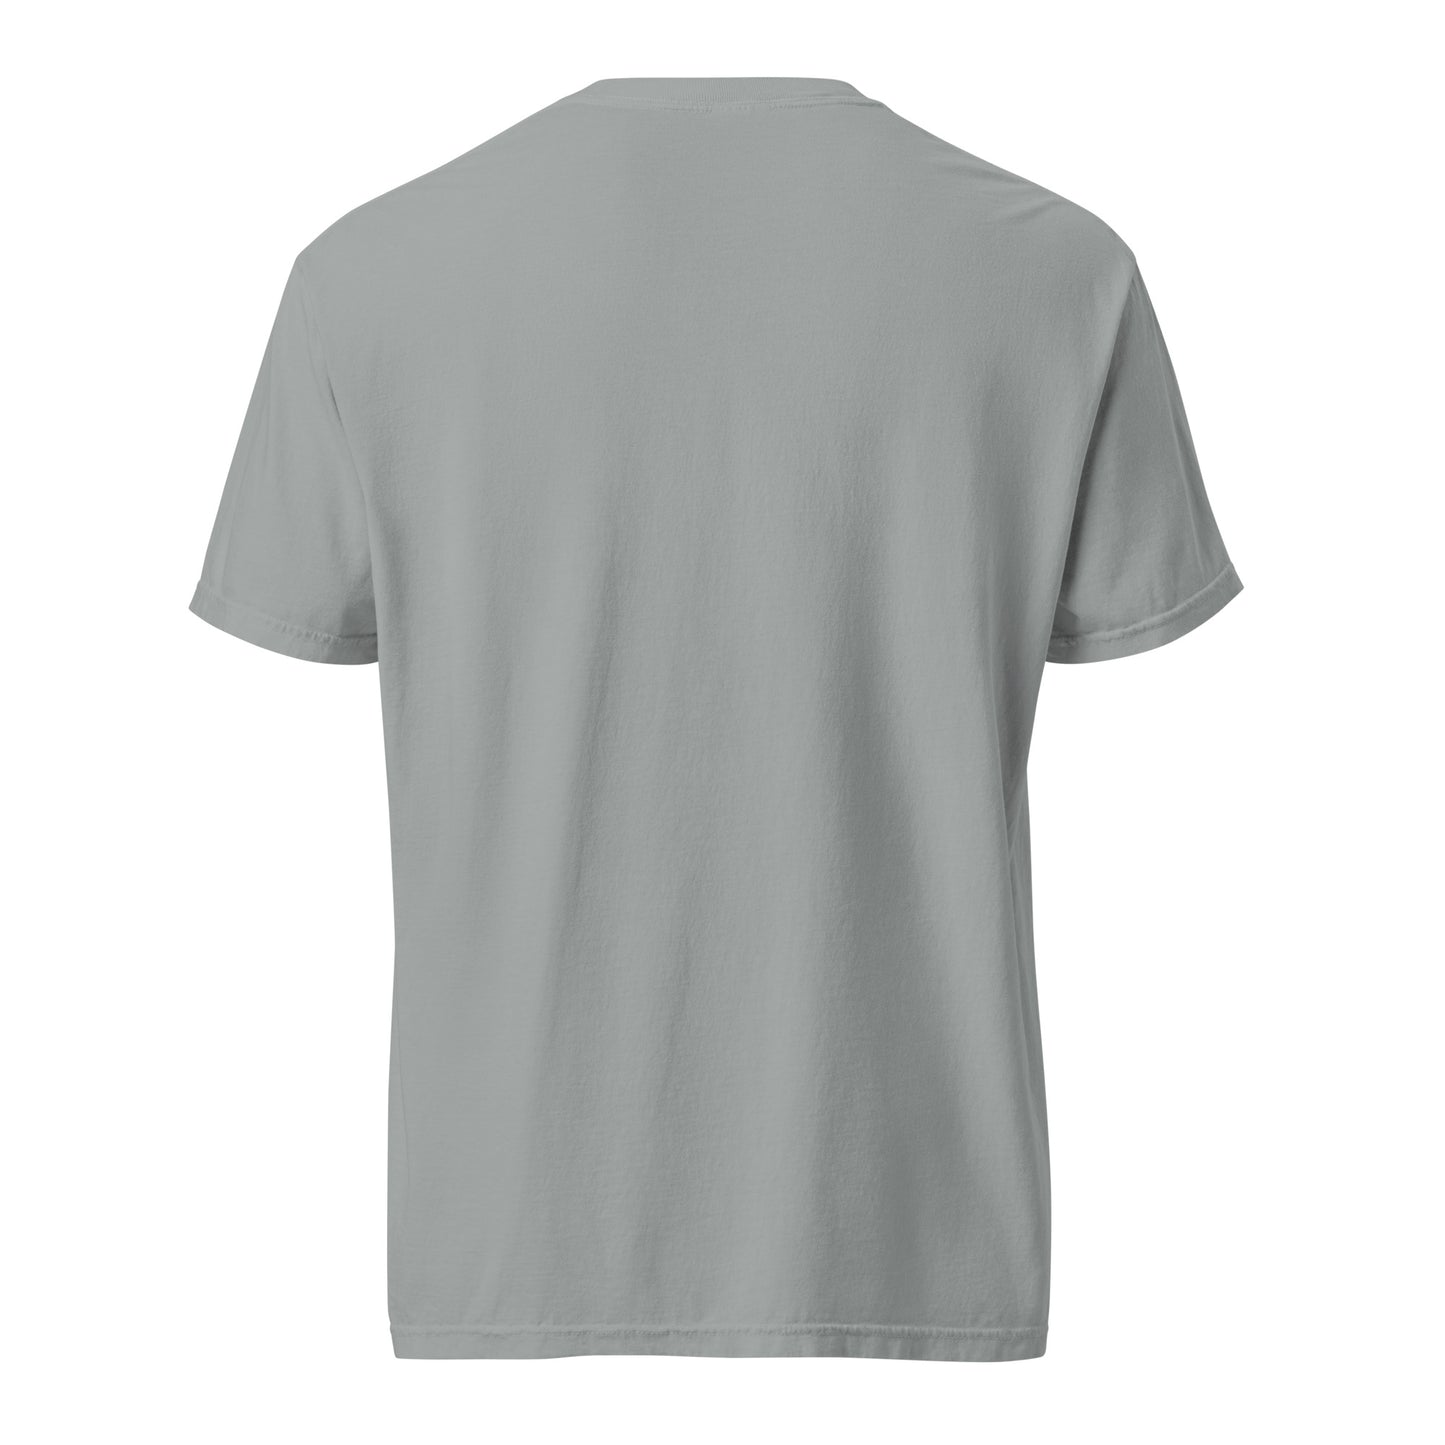 Oregon Dreams - Unisex garment-dyed heavyweight t-shirt